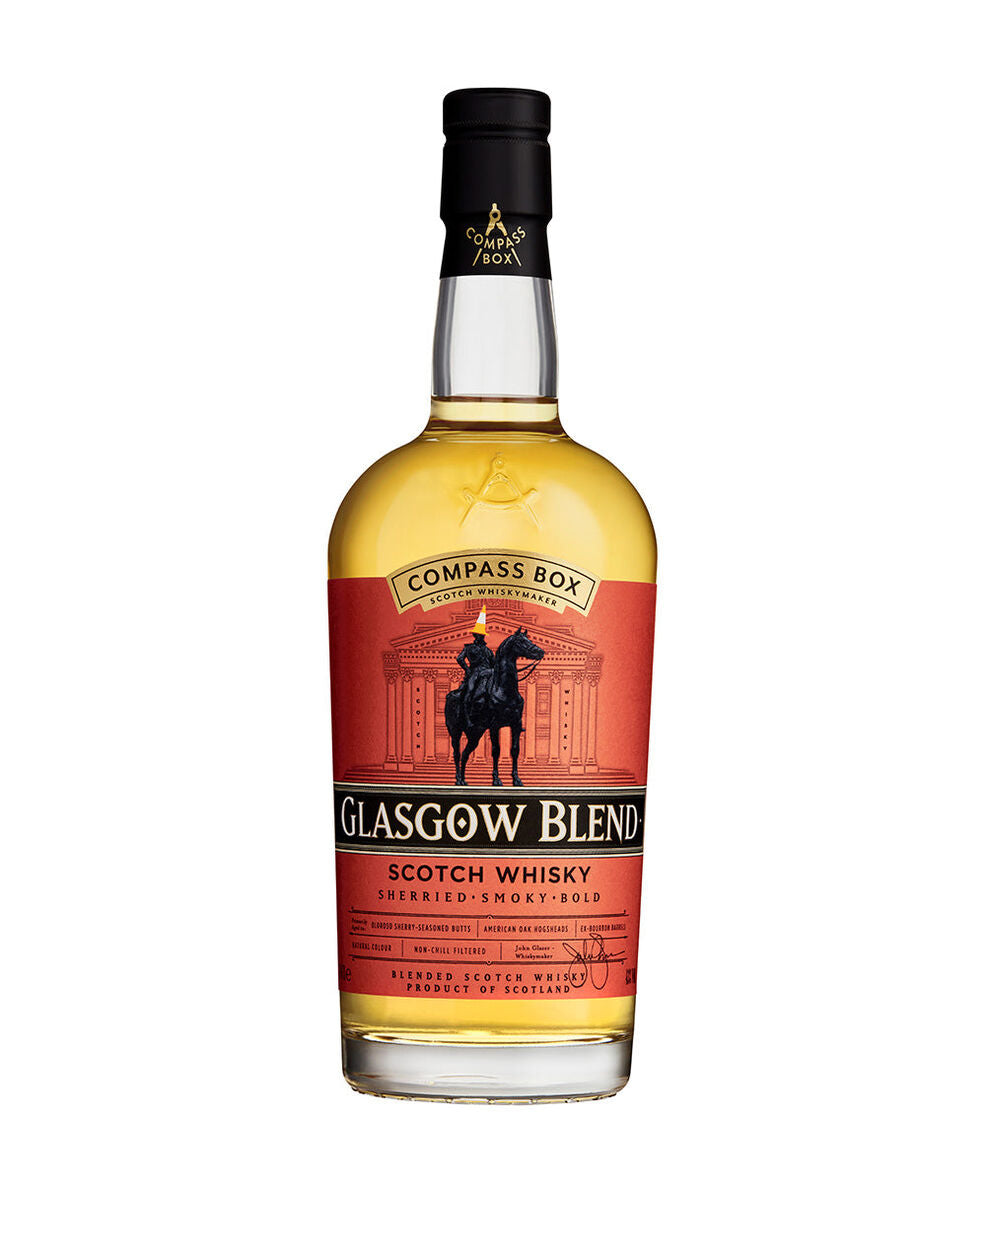 Compass Box Glasgow Blend Scotch Whisky